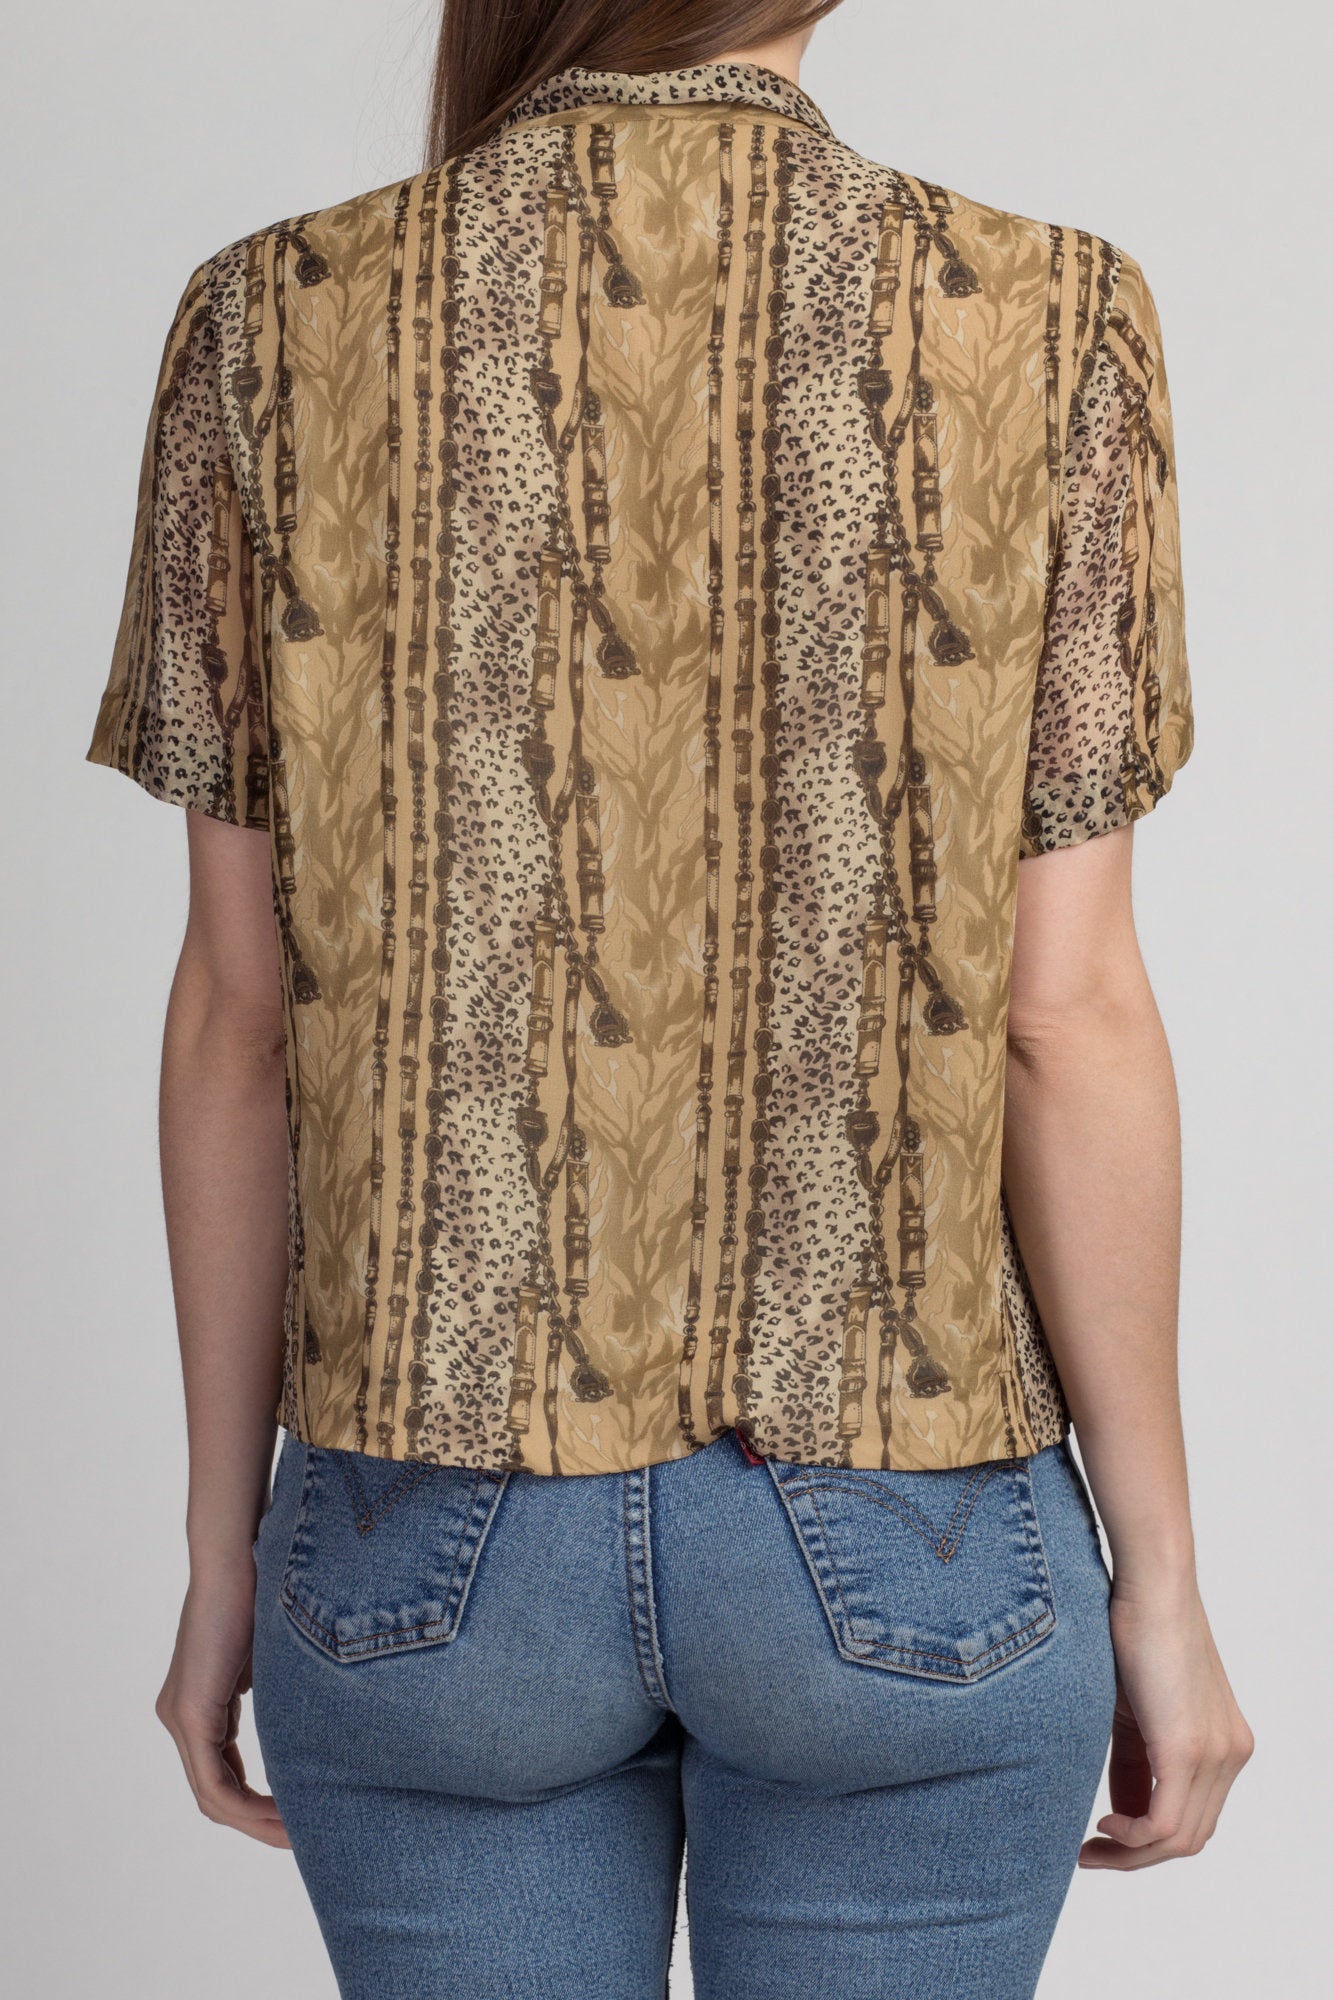 Vintage Silk Baroque Animal Print Shirt - Medium | 90s Short Sleeve Equestrian Button Up Collared Top